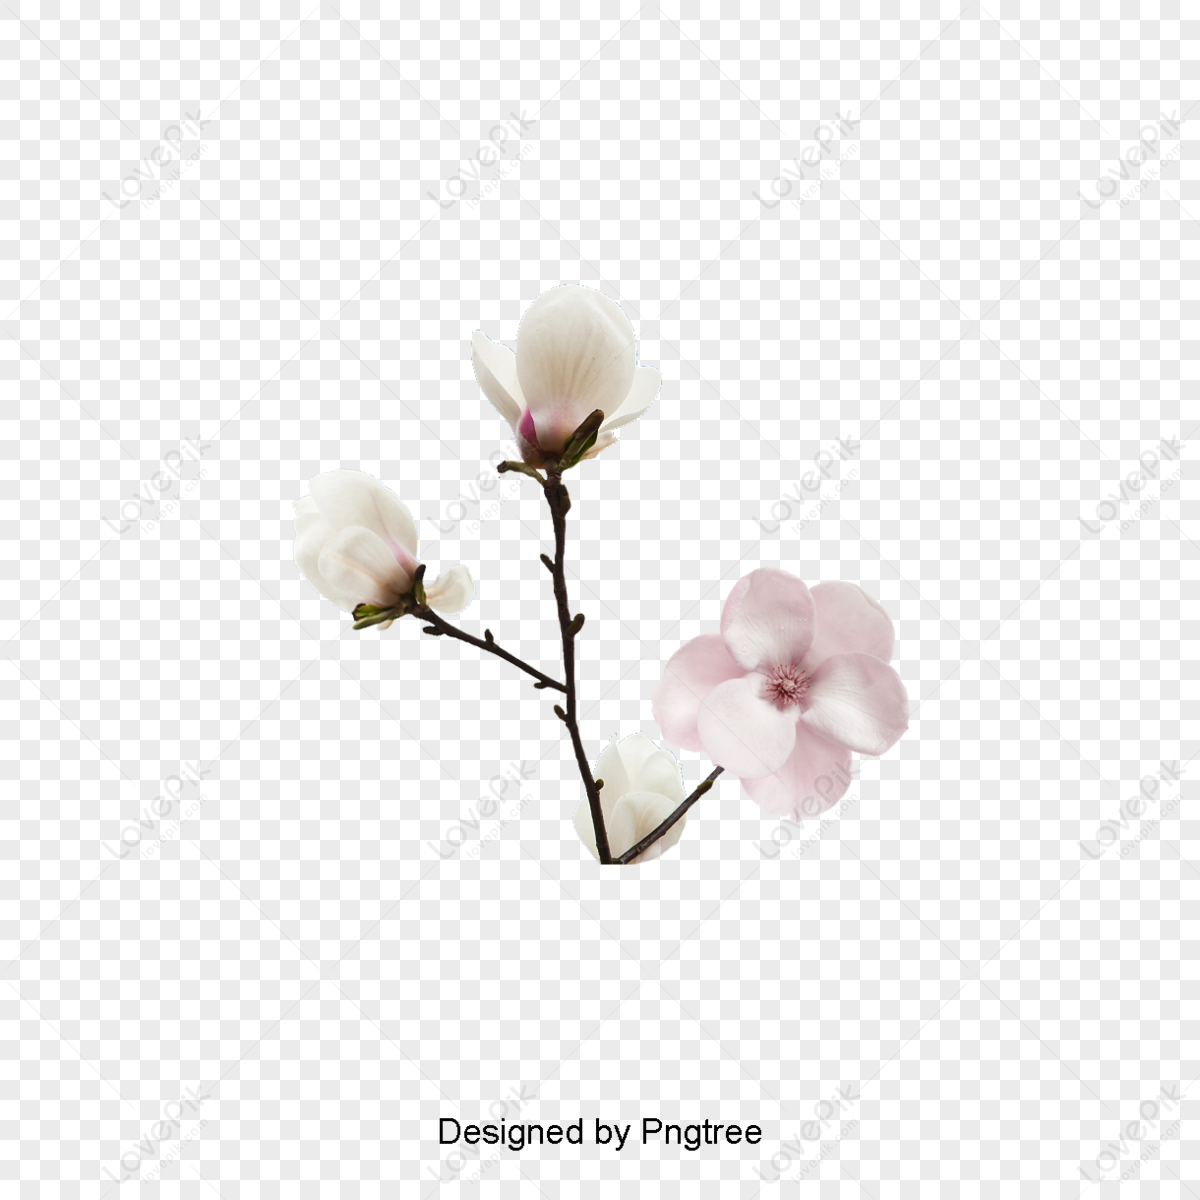 Blossom Flower PNG Image - PurePNG